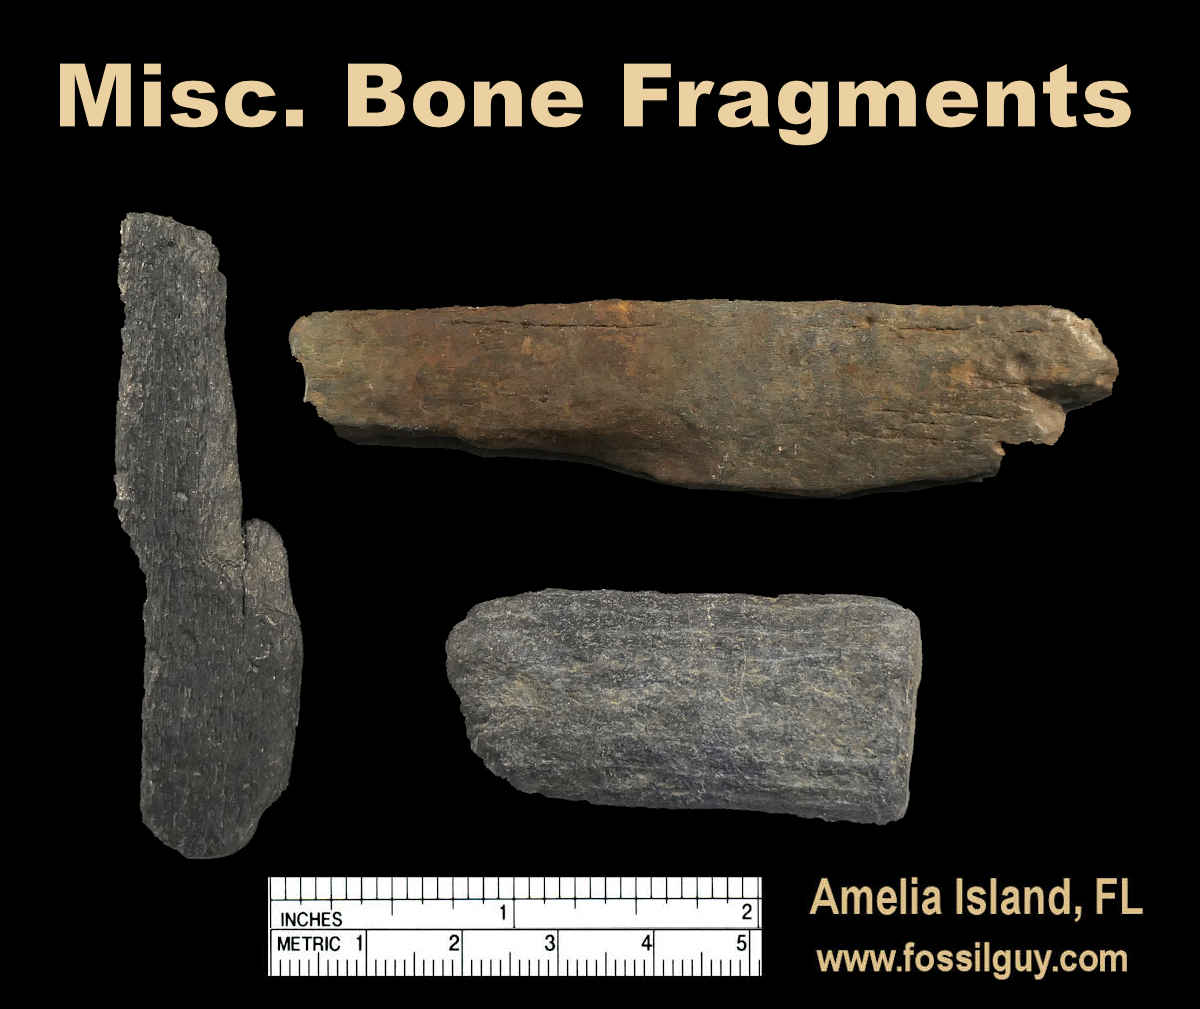 Bone fragment fossils of Amelia Island, Florida